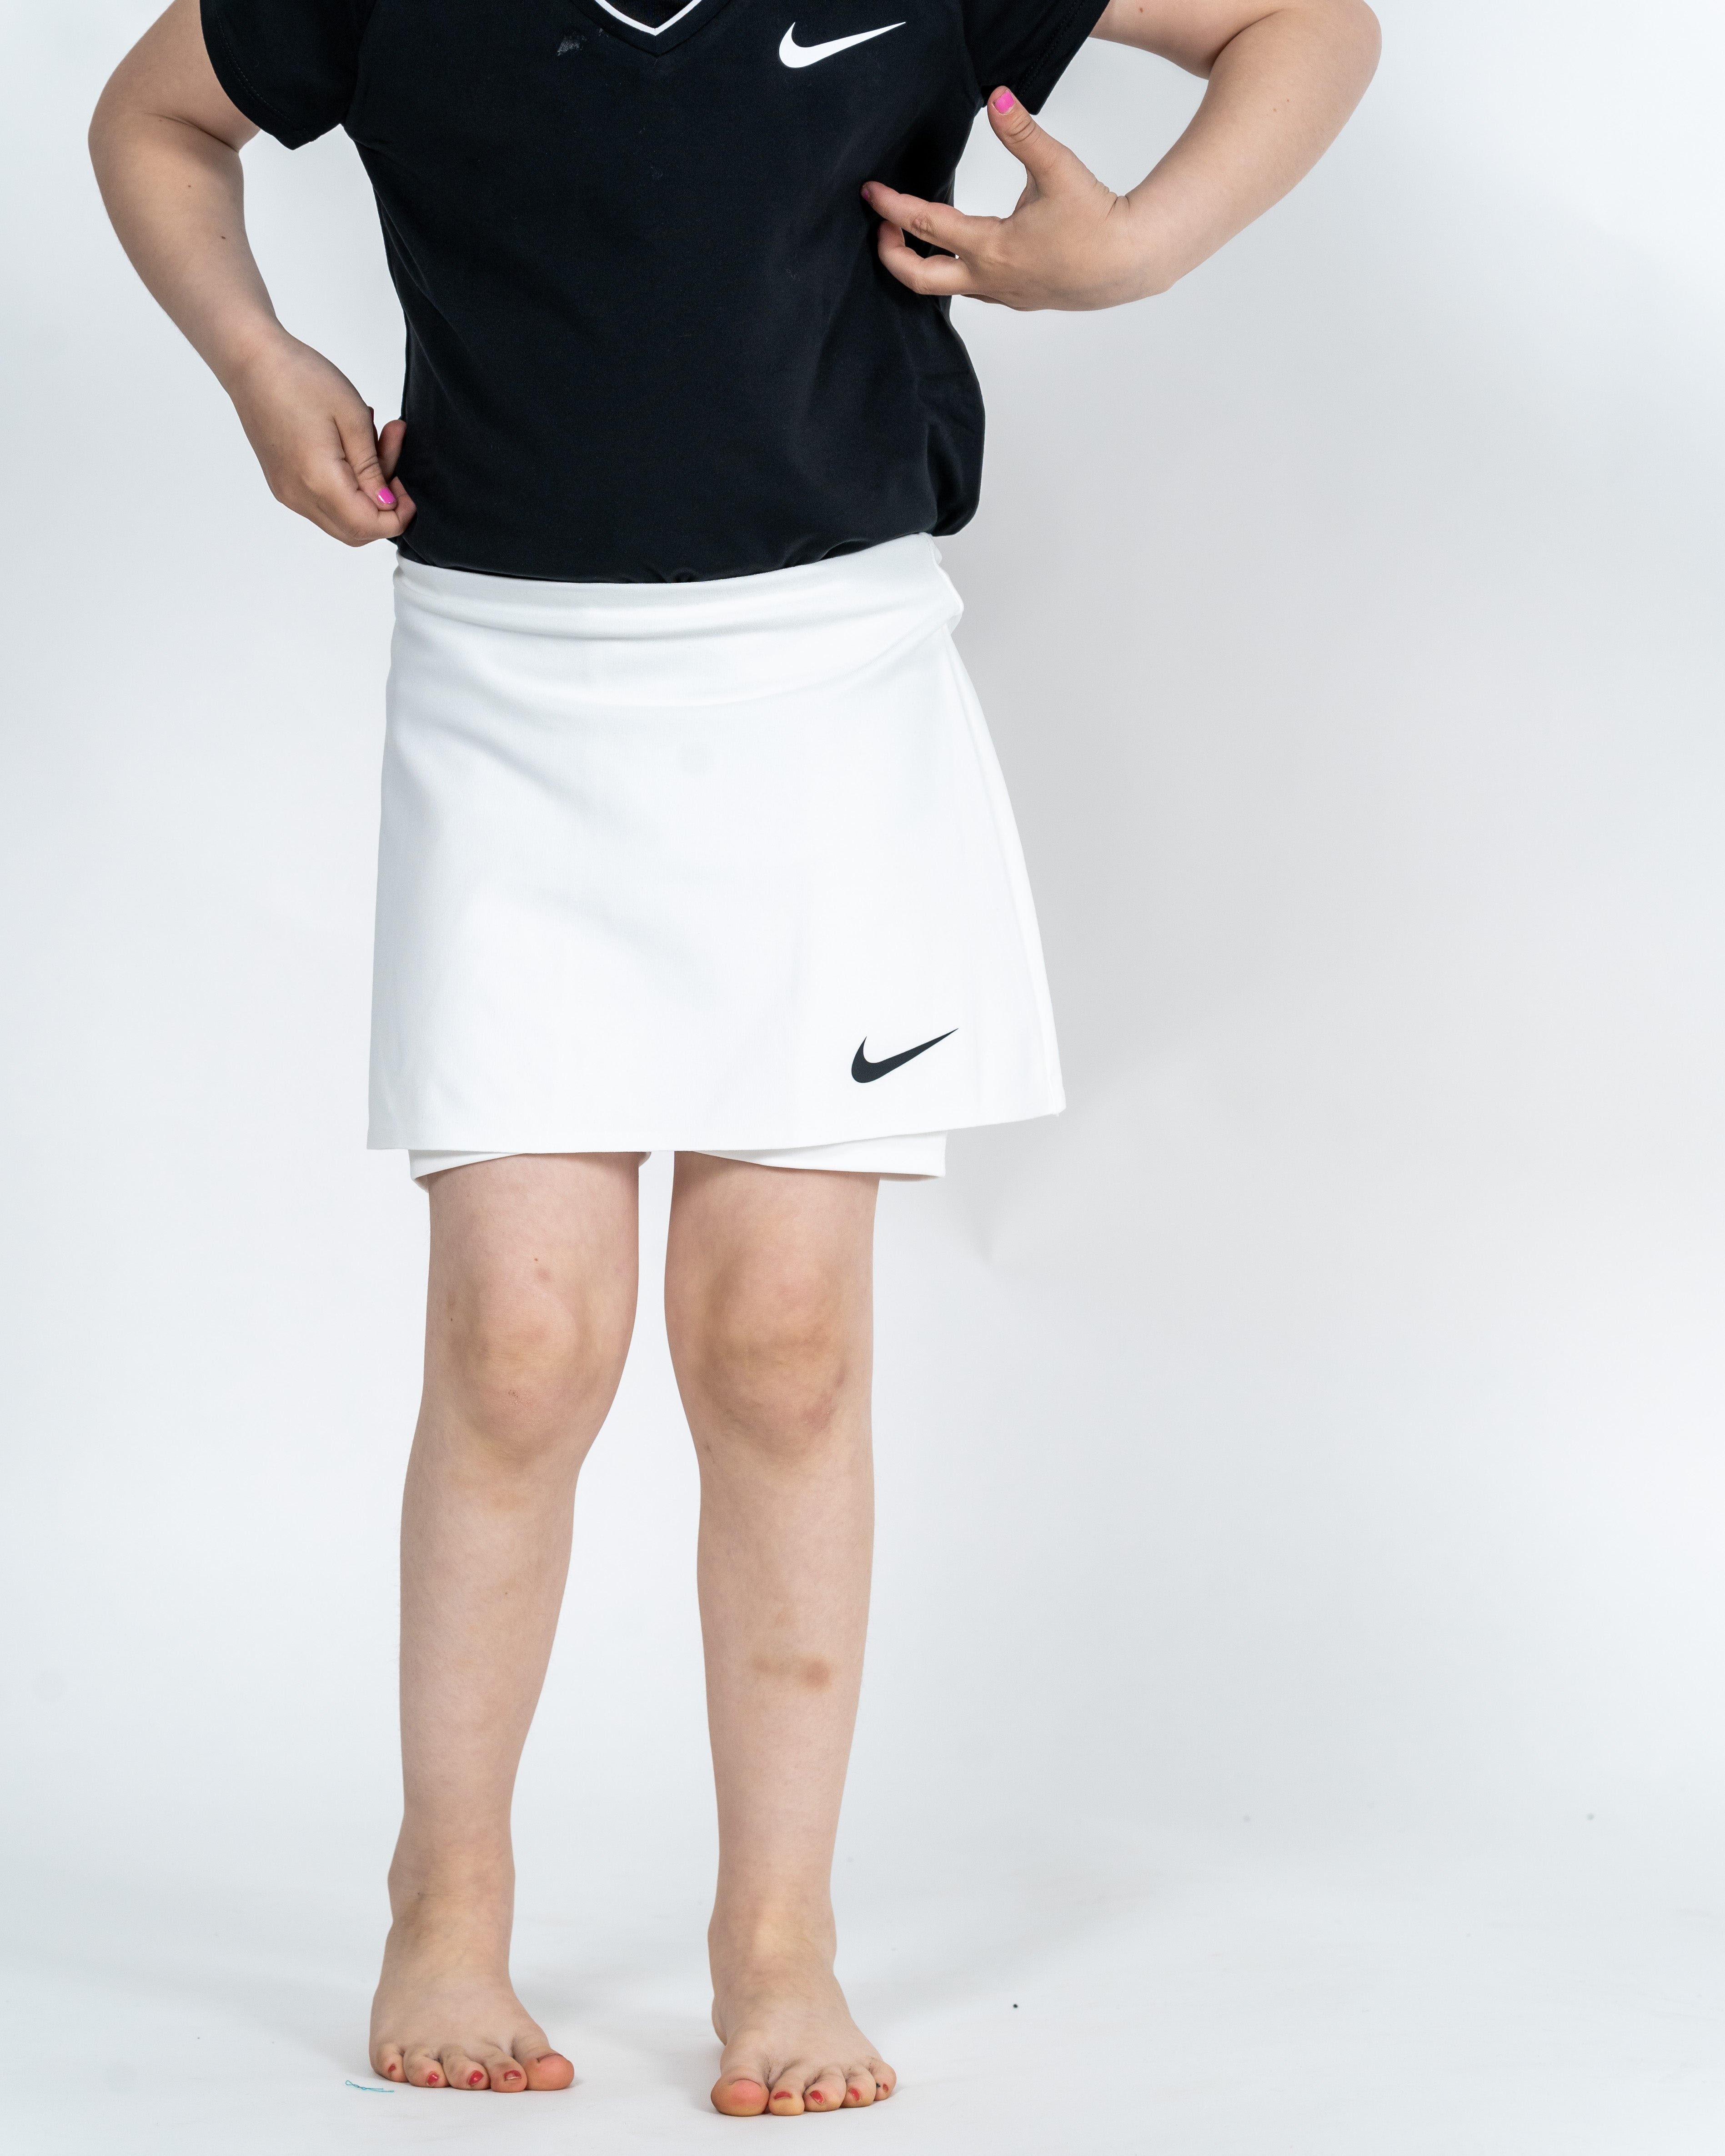 Nike Pige Skirt Hvid